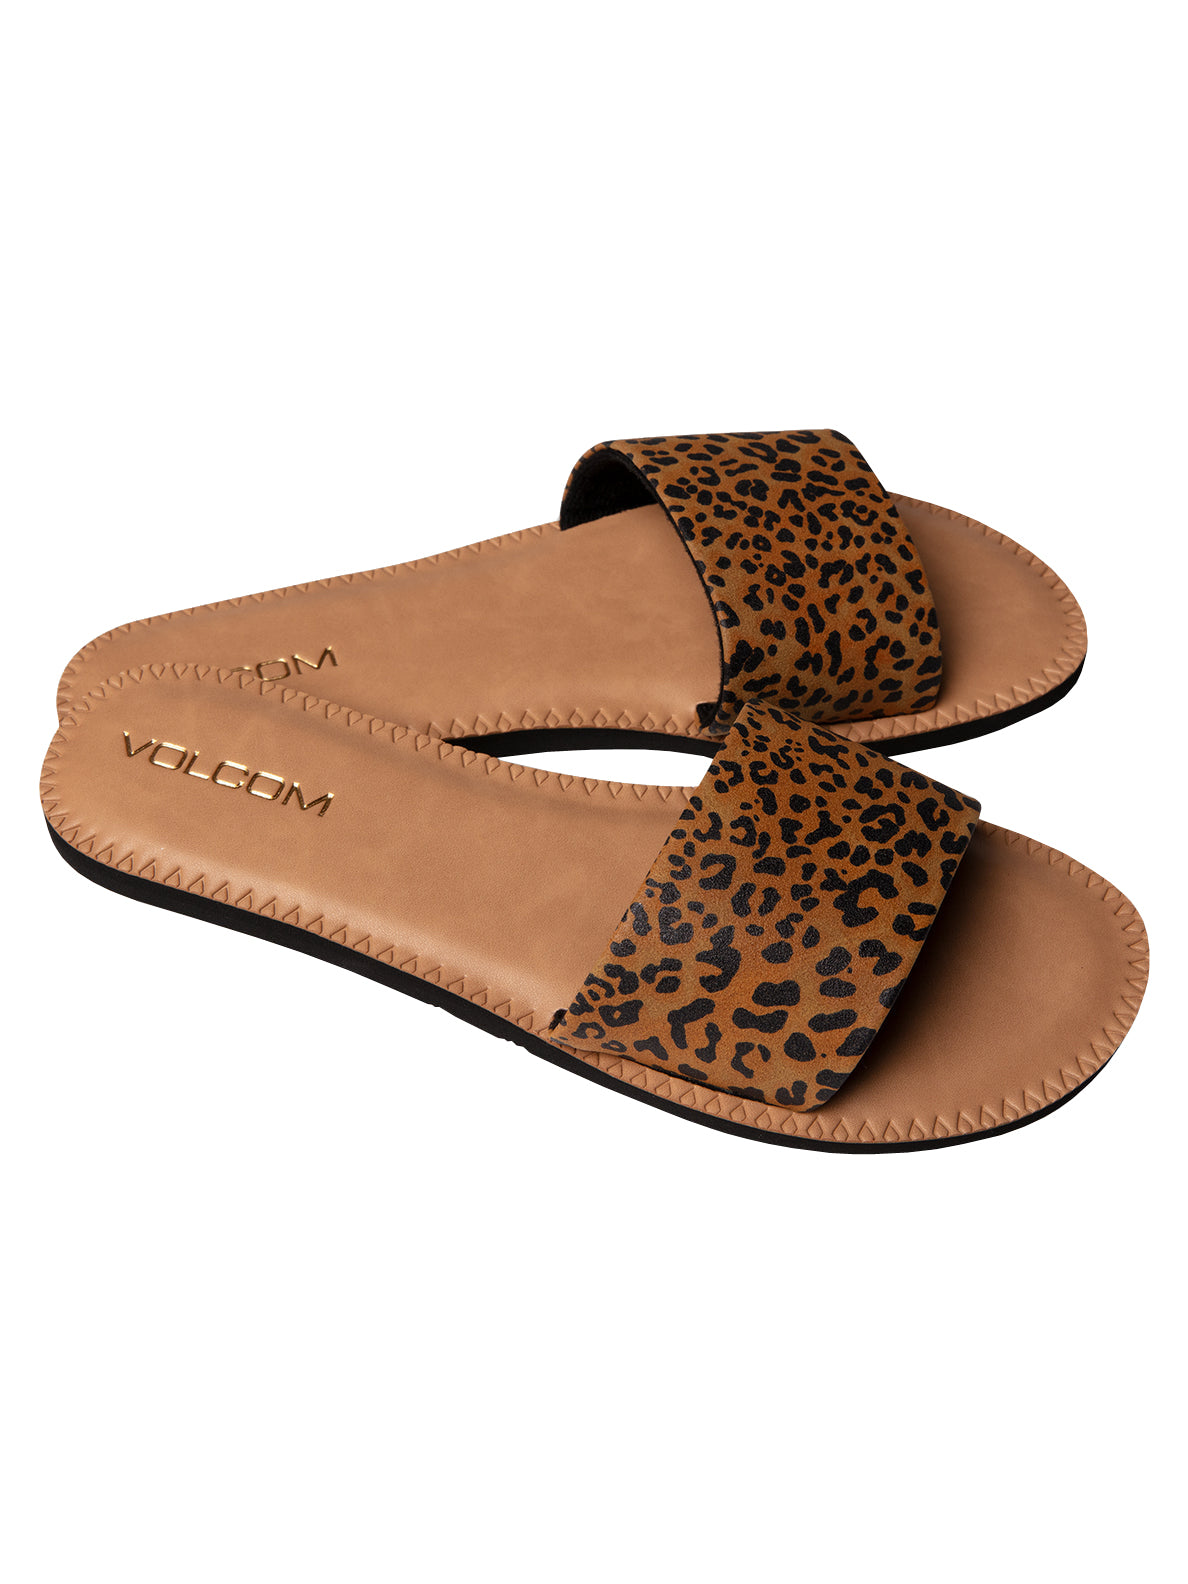 Volcom Simple Slide Womens Sandal CHE-Cheetah 7